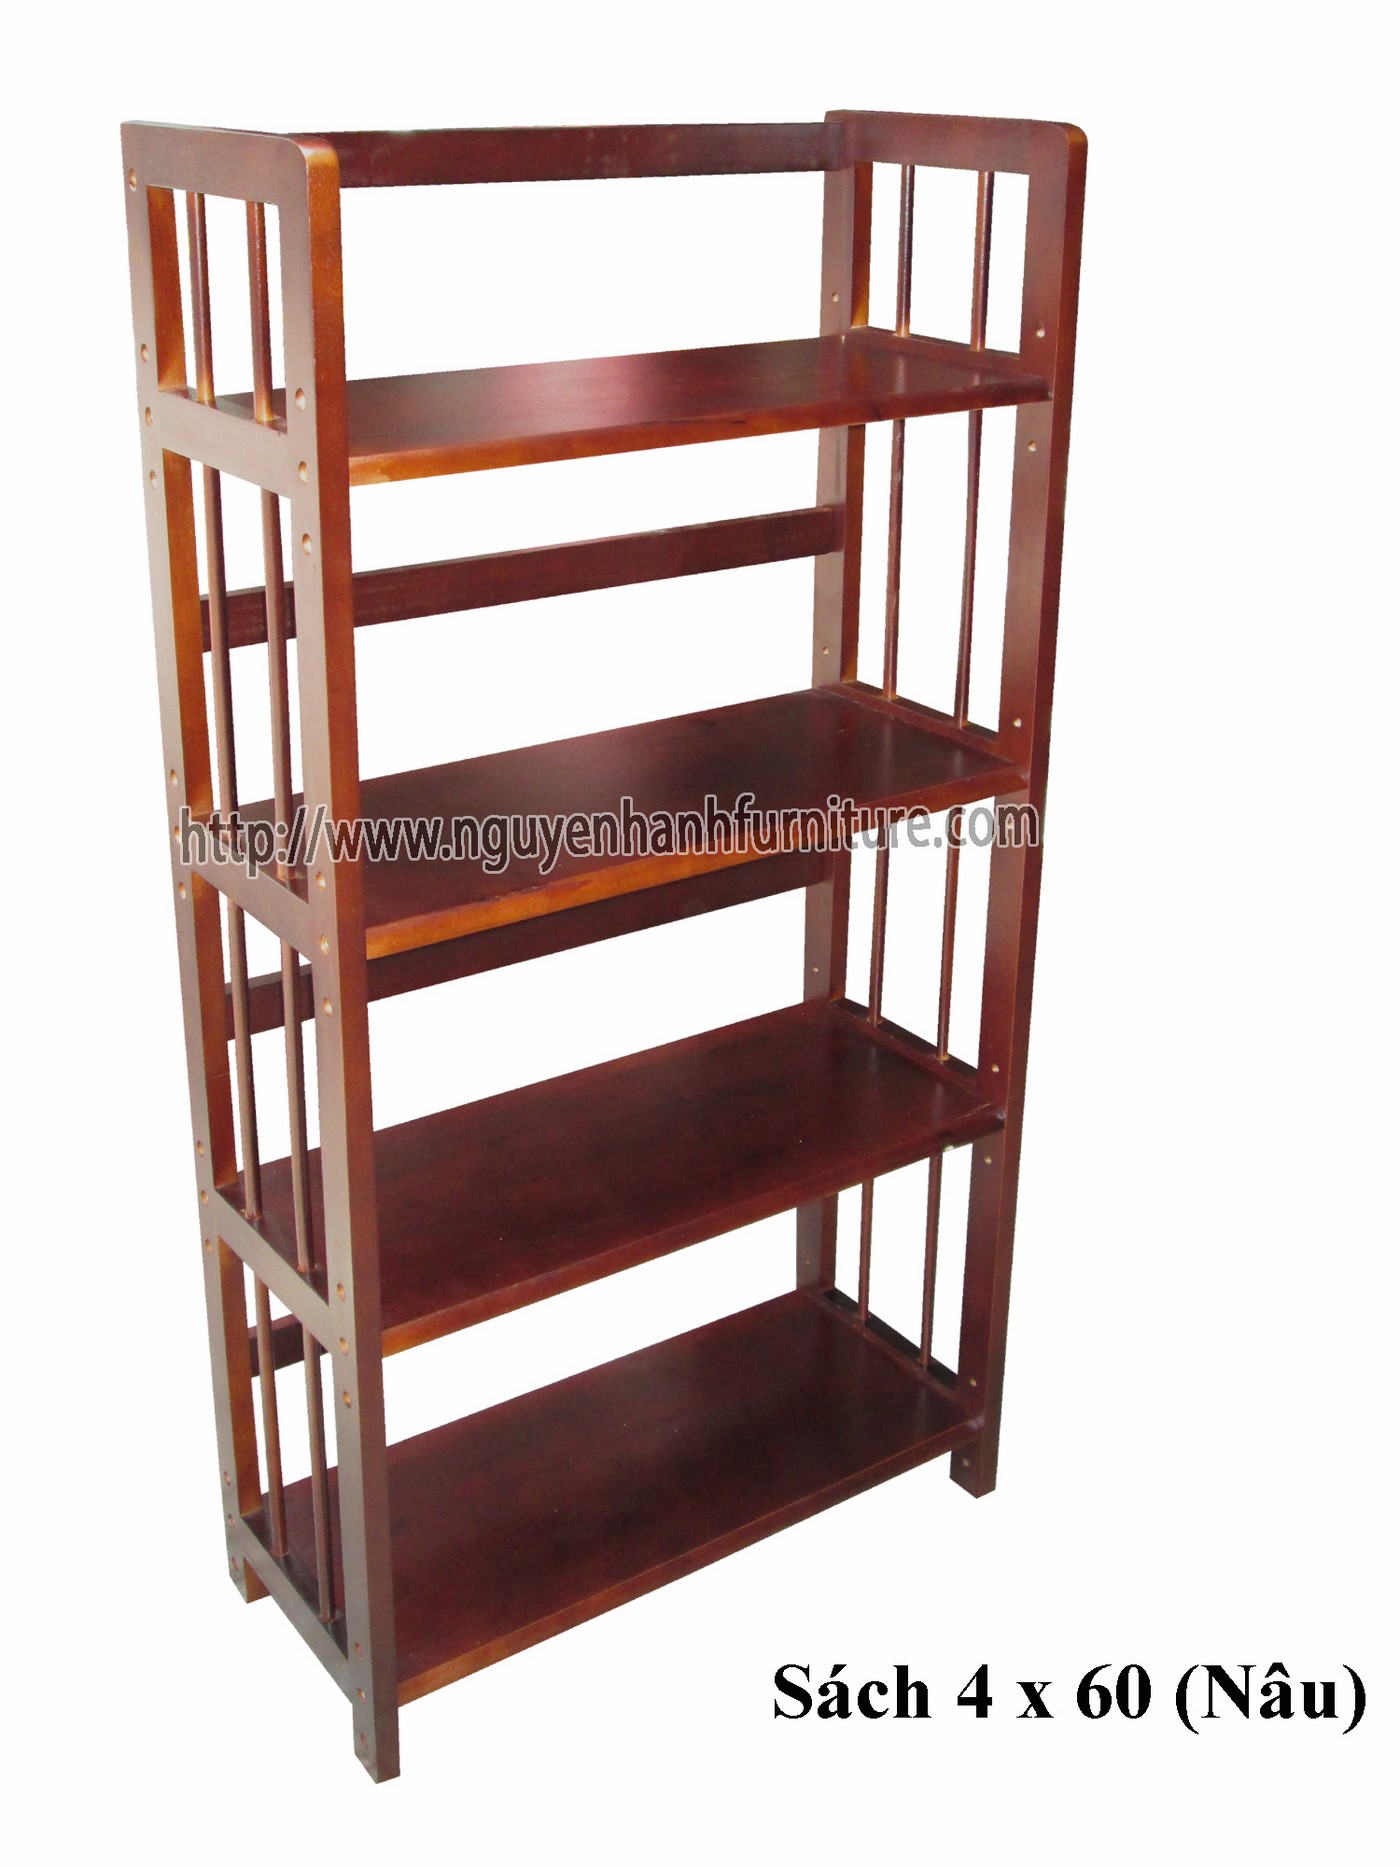 Name product: 4 storey Adjustable Bookshelf 60 (Brown) - Dimensions: 60 x 28 x 120 (H) - Description: Wood natural rubber